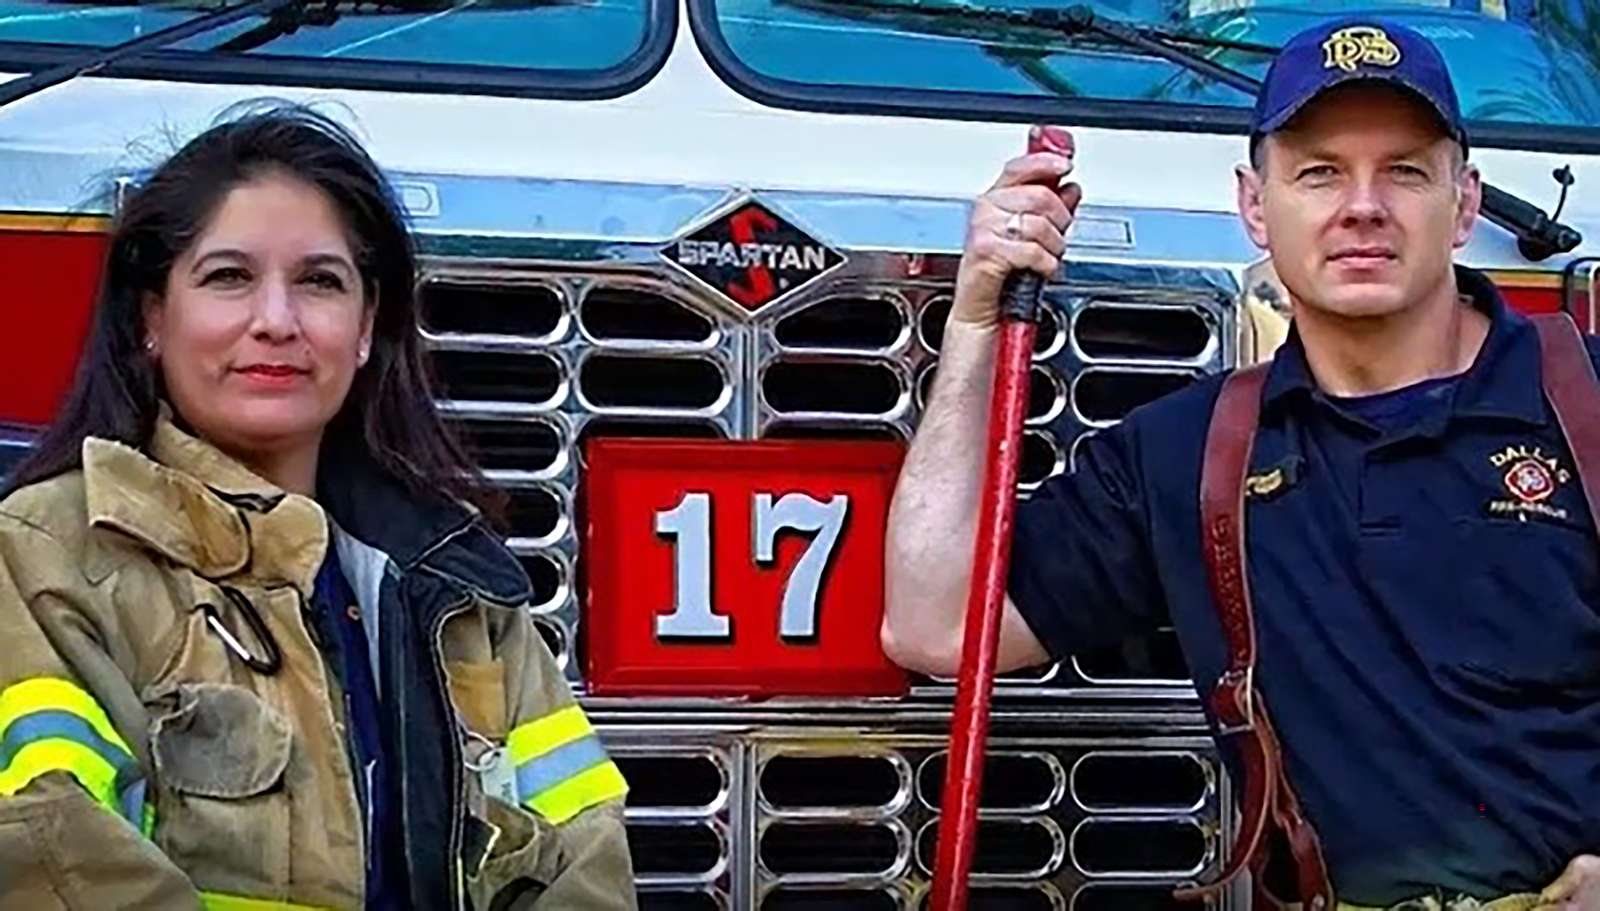 Liz brandmannen pussel online från foto